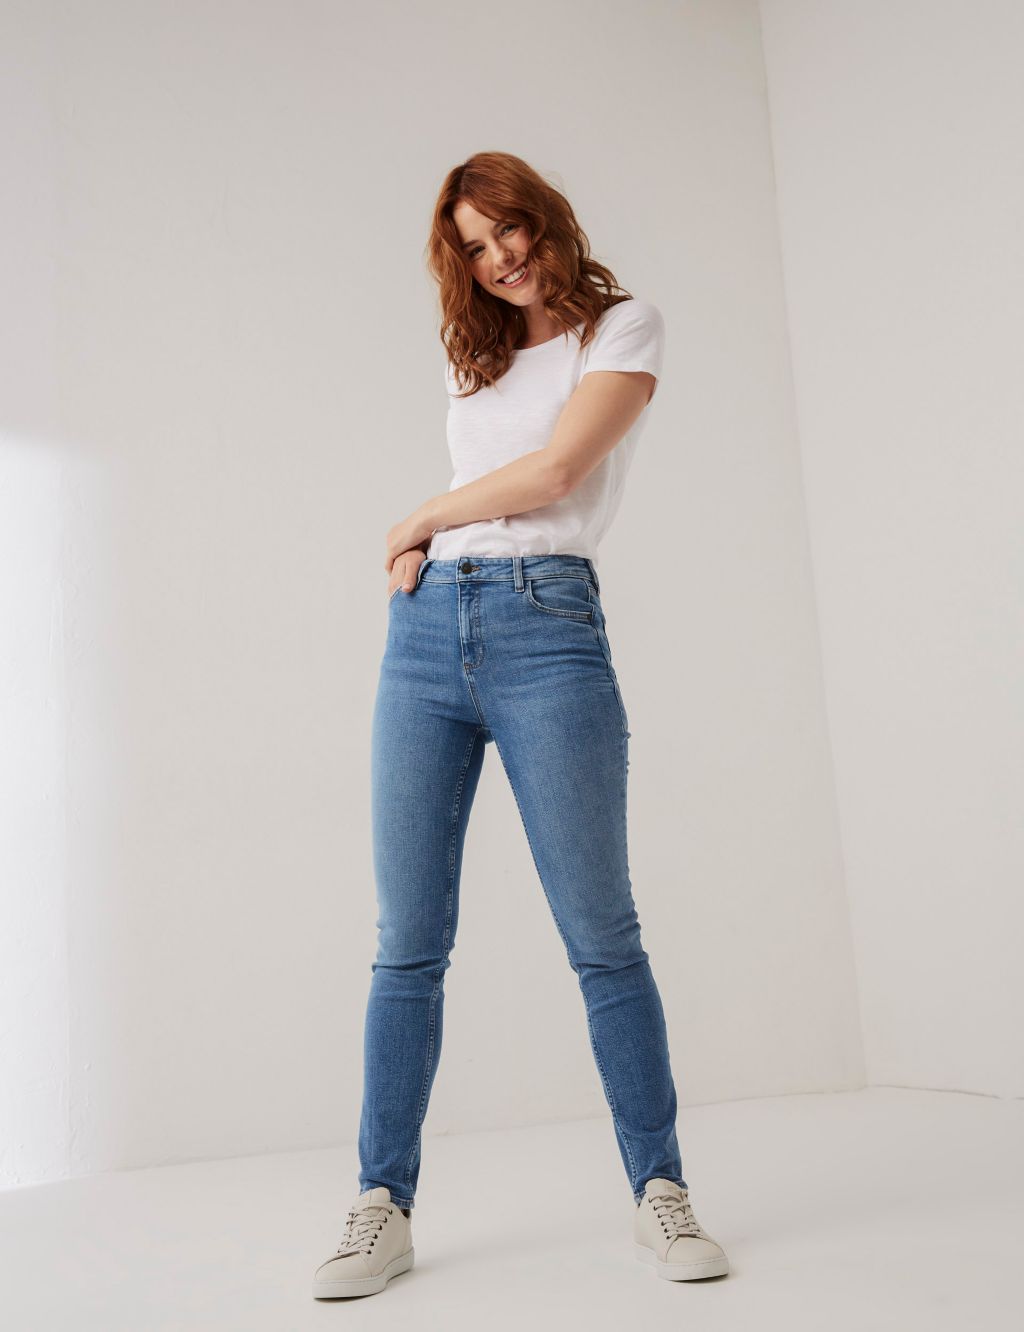 Slim Fit Jeans image 1